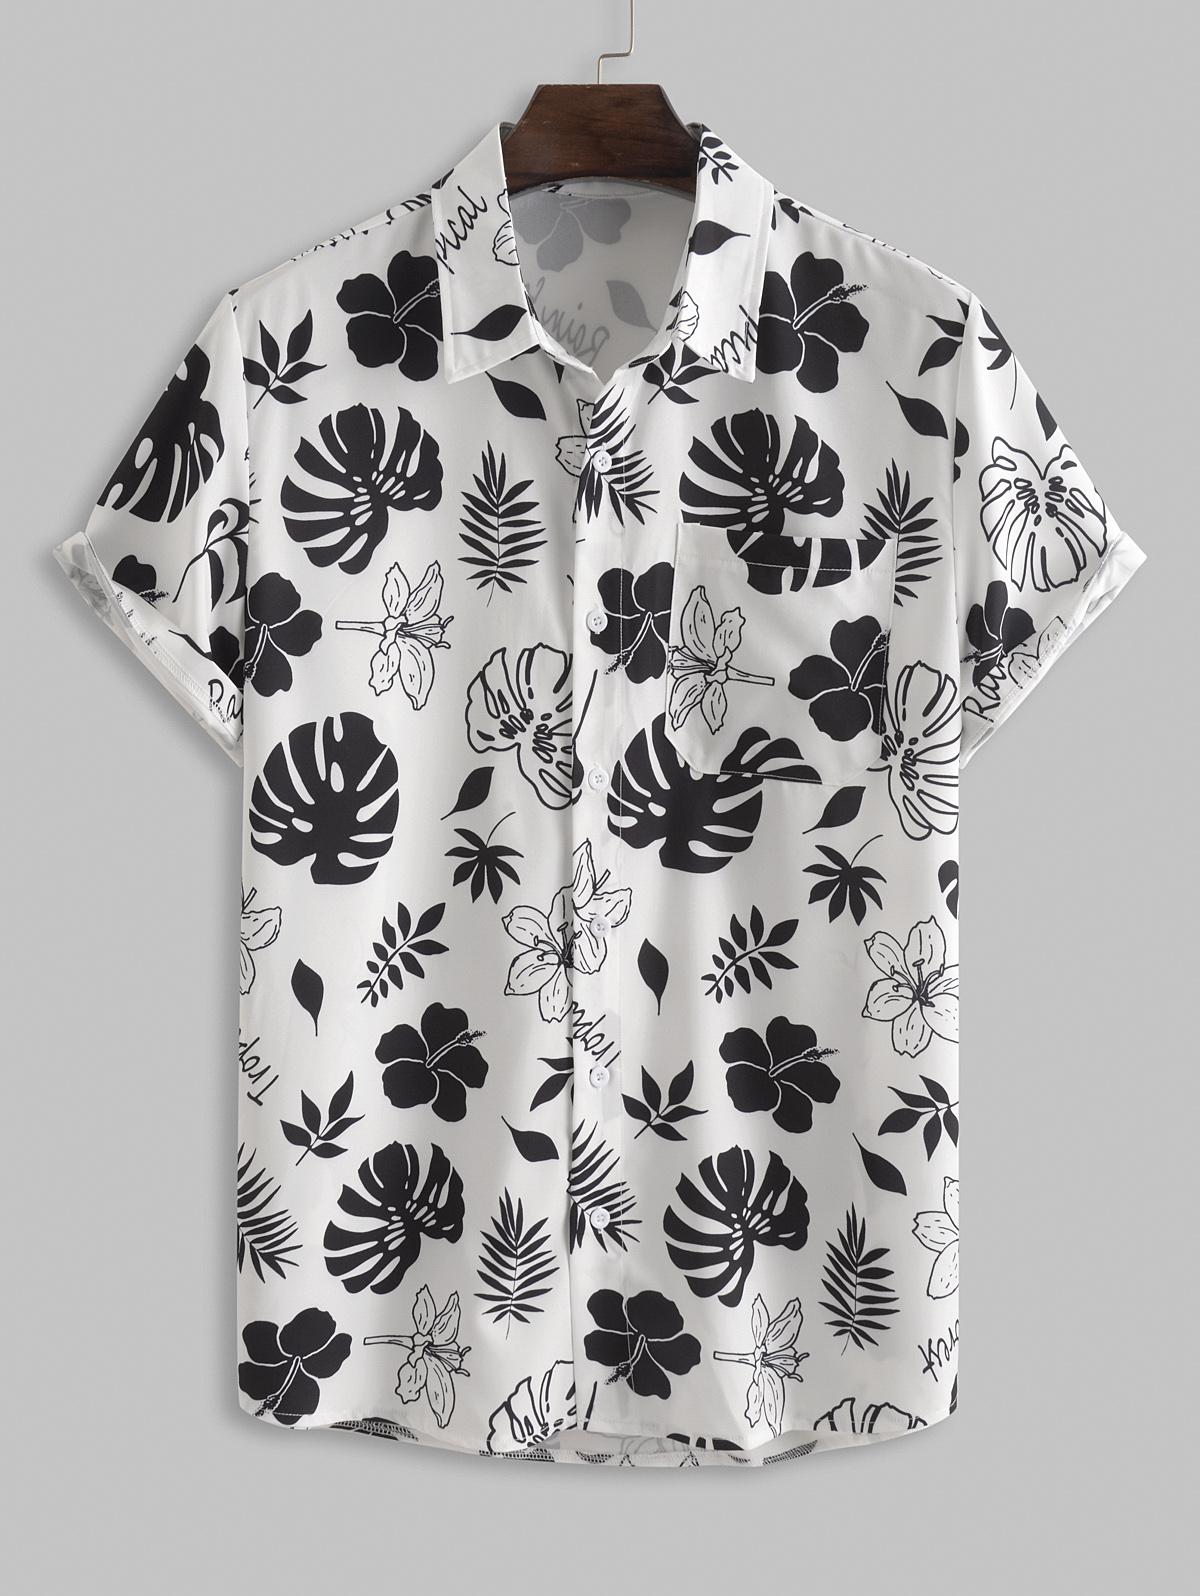 ZAFUL Men's ZAFUL Short Sleeves Leaf and Floral Tropical Print Shirt S Black